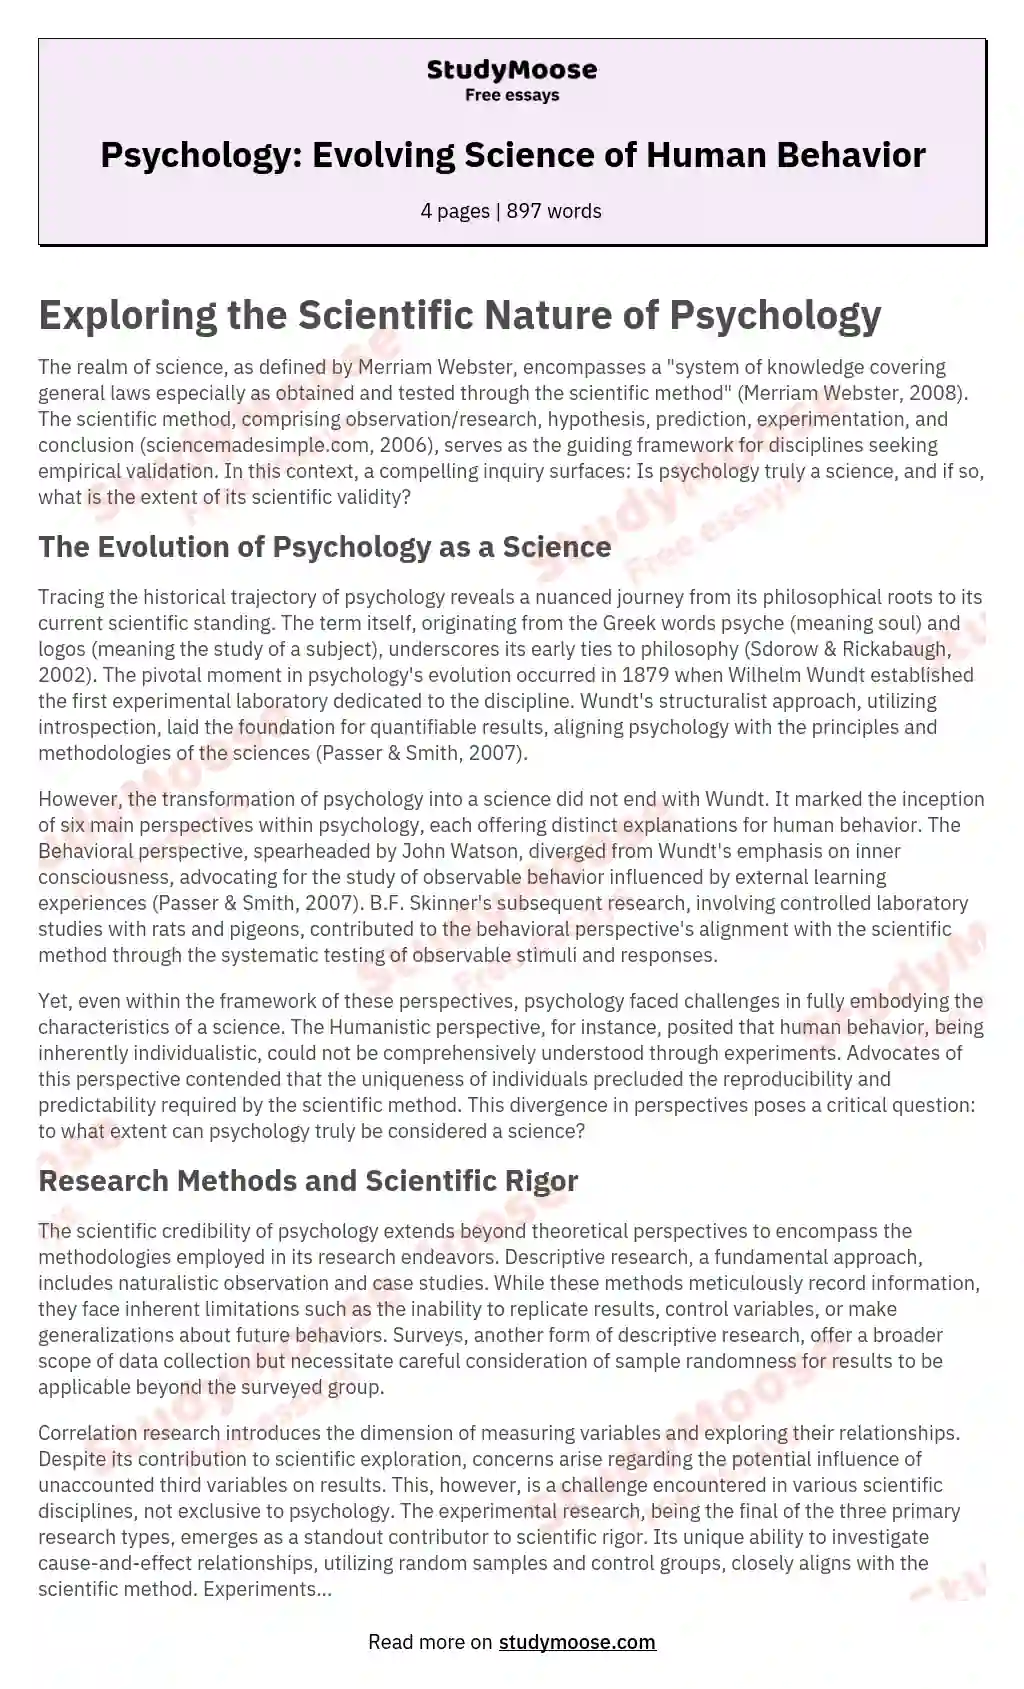 Psychology: Evolving Science of Human Behavior essay